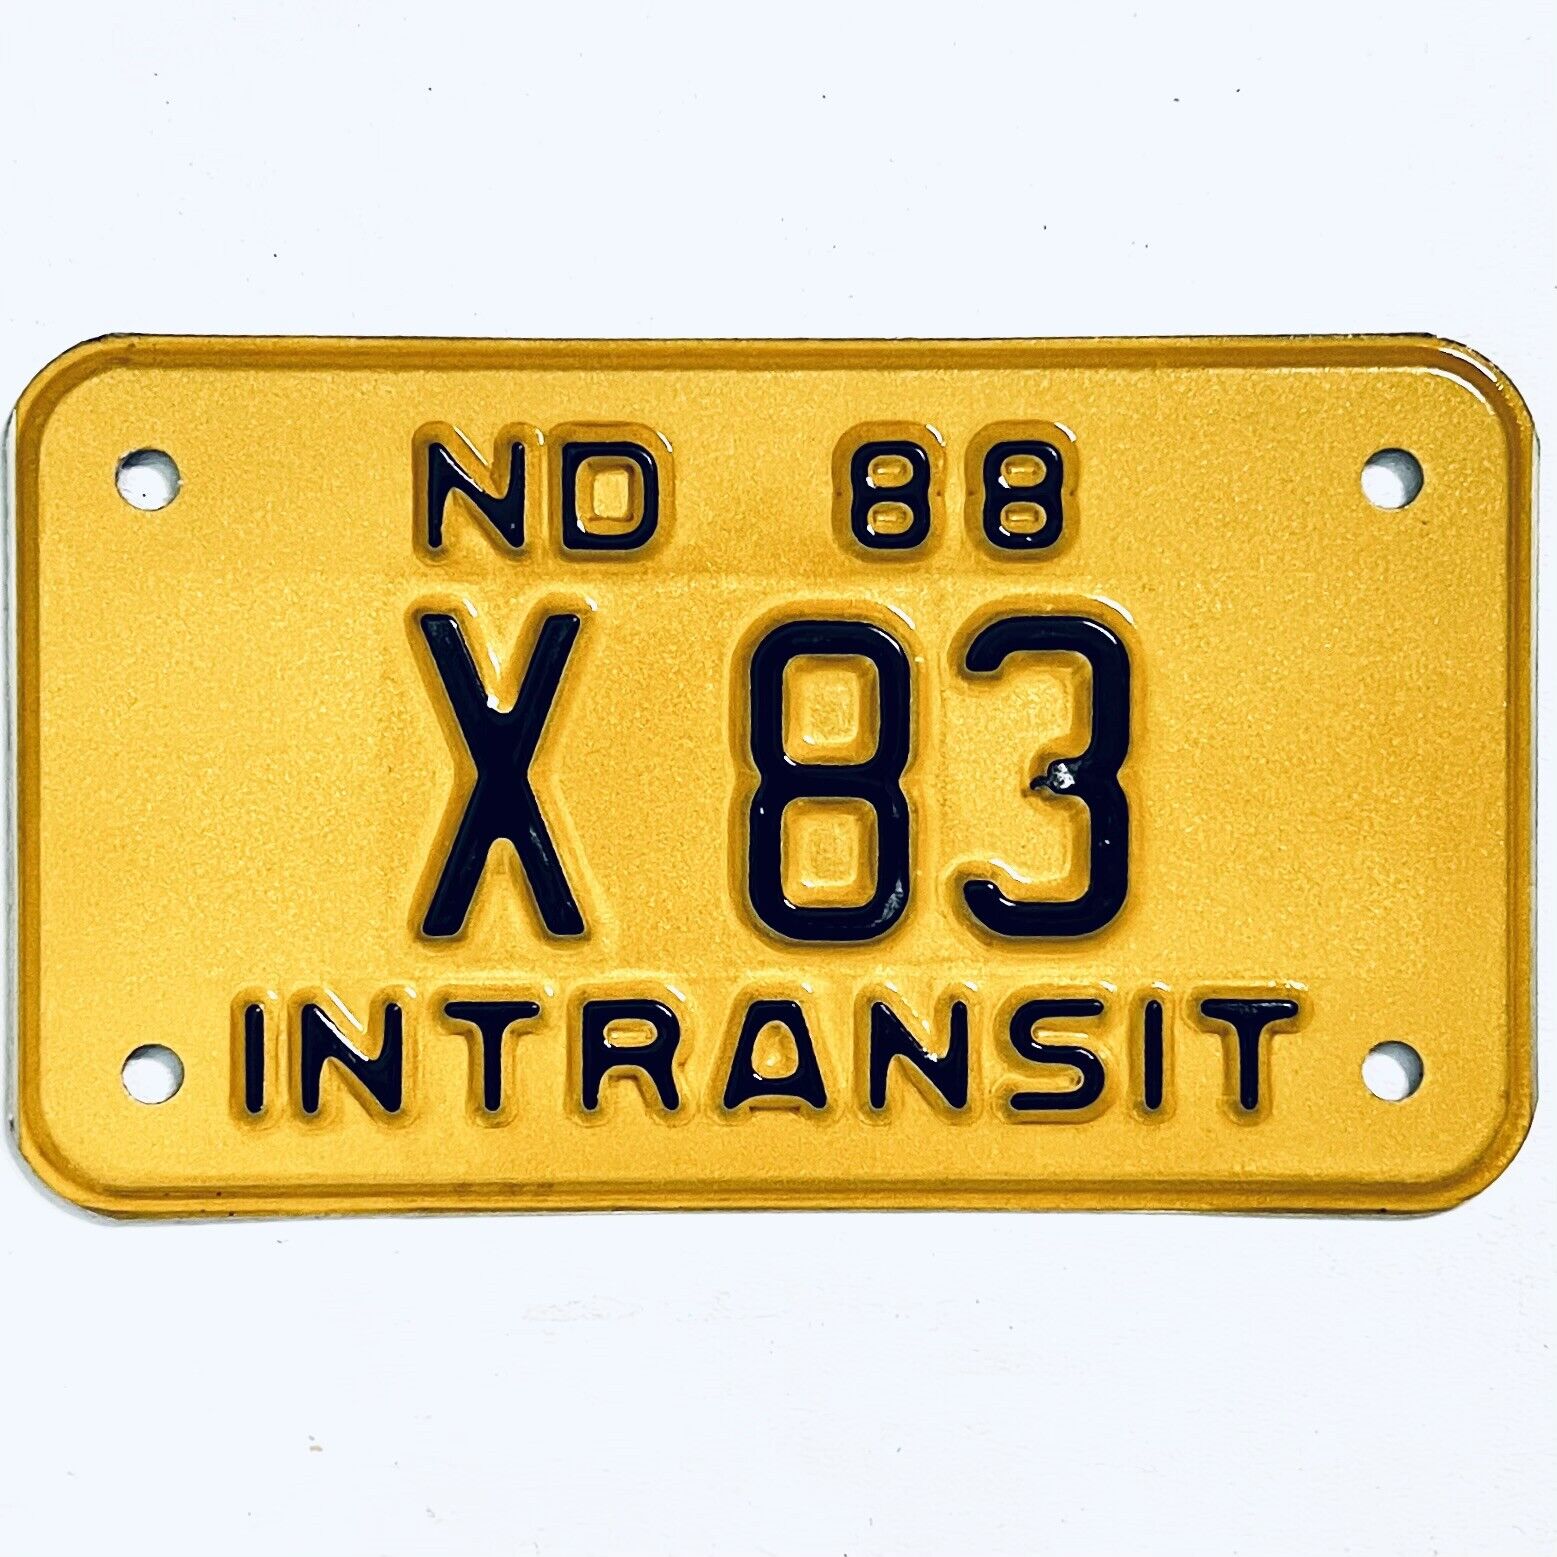 1988 United States North Dakota Intransit Special License Plate X 83